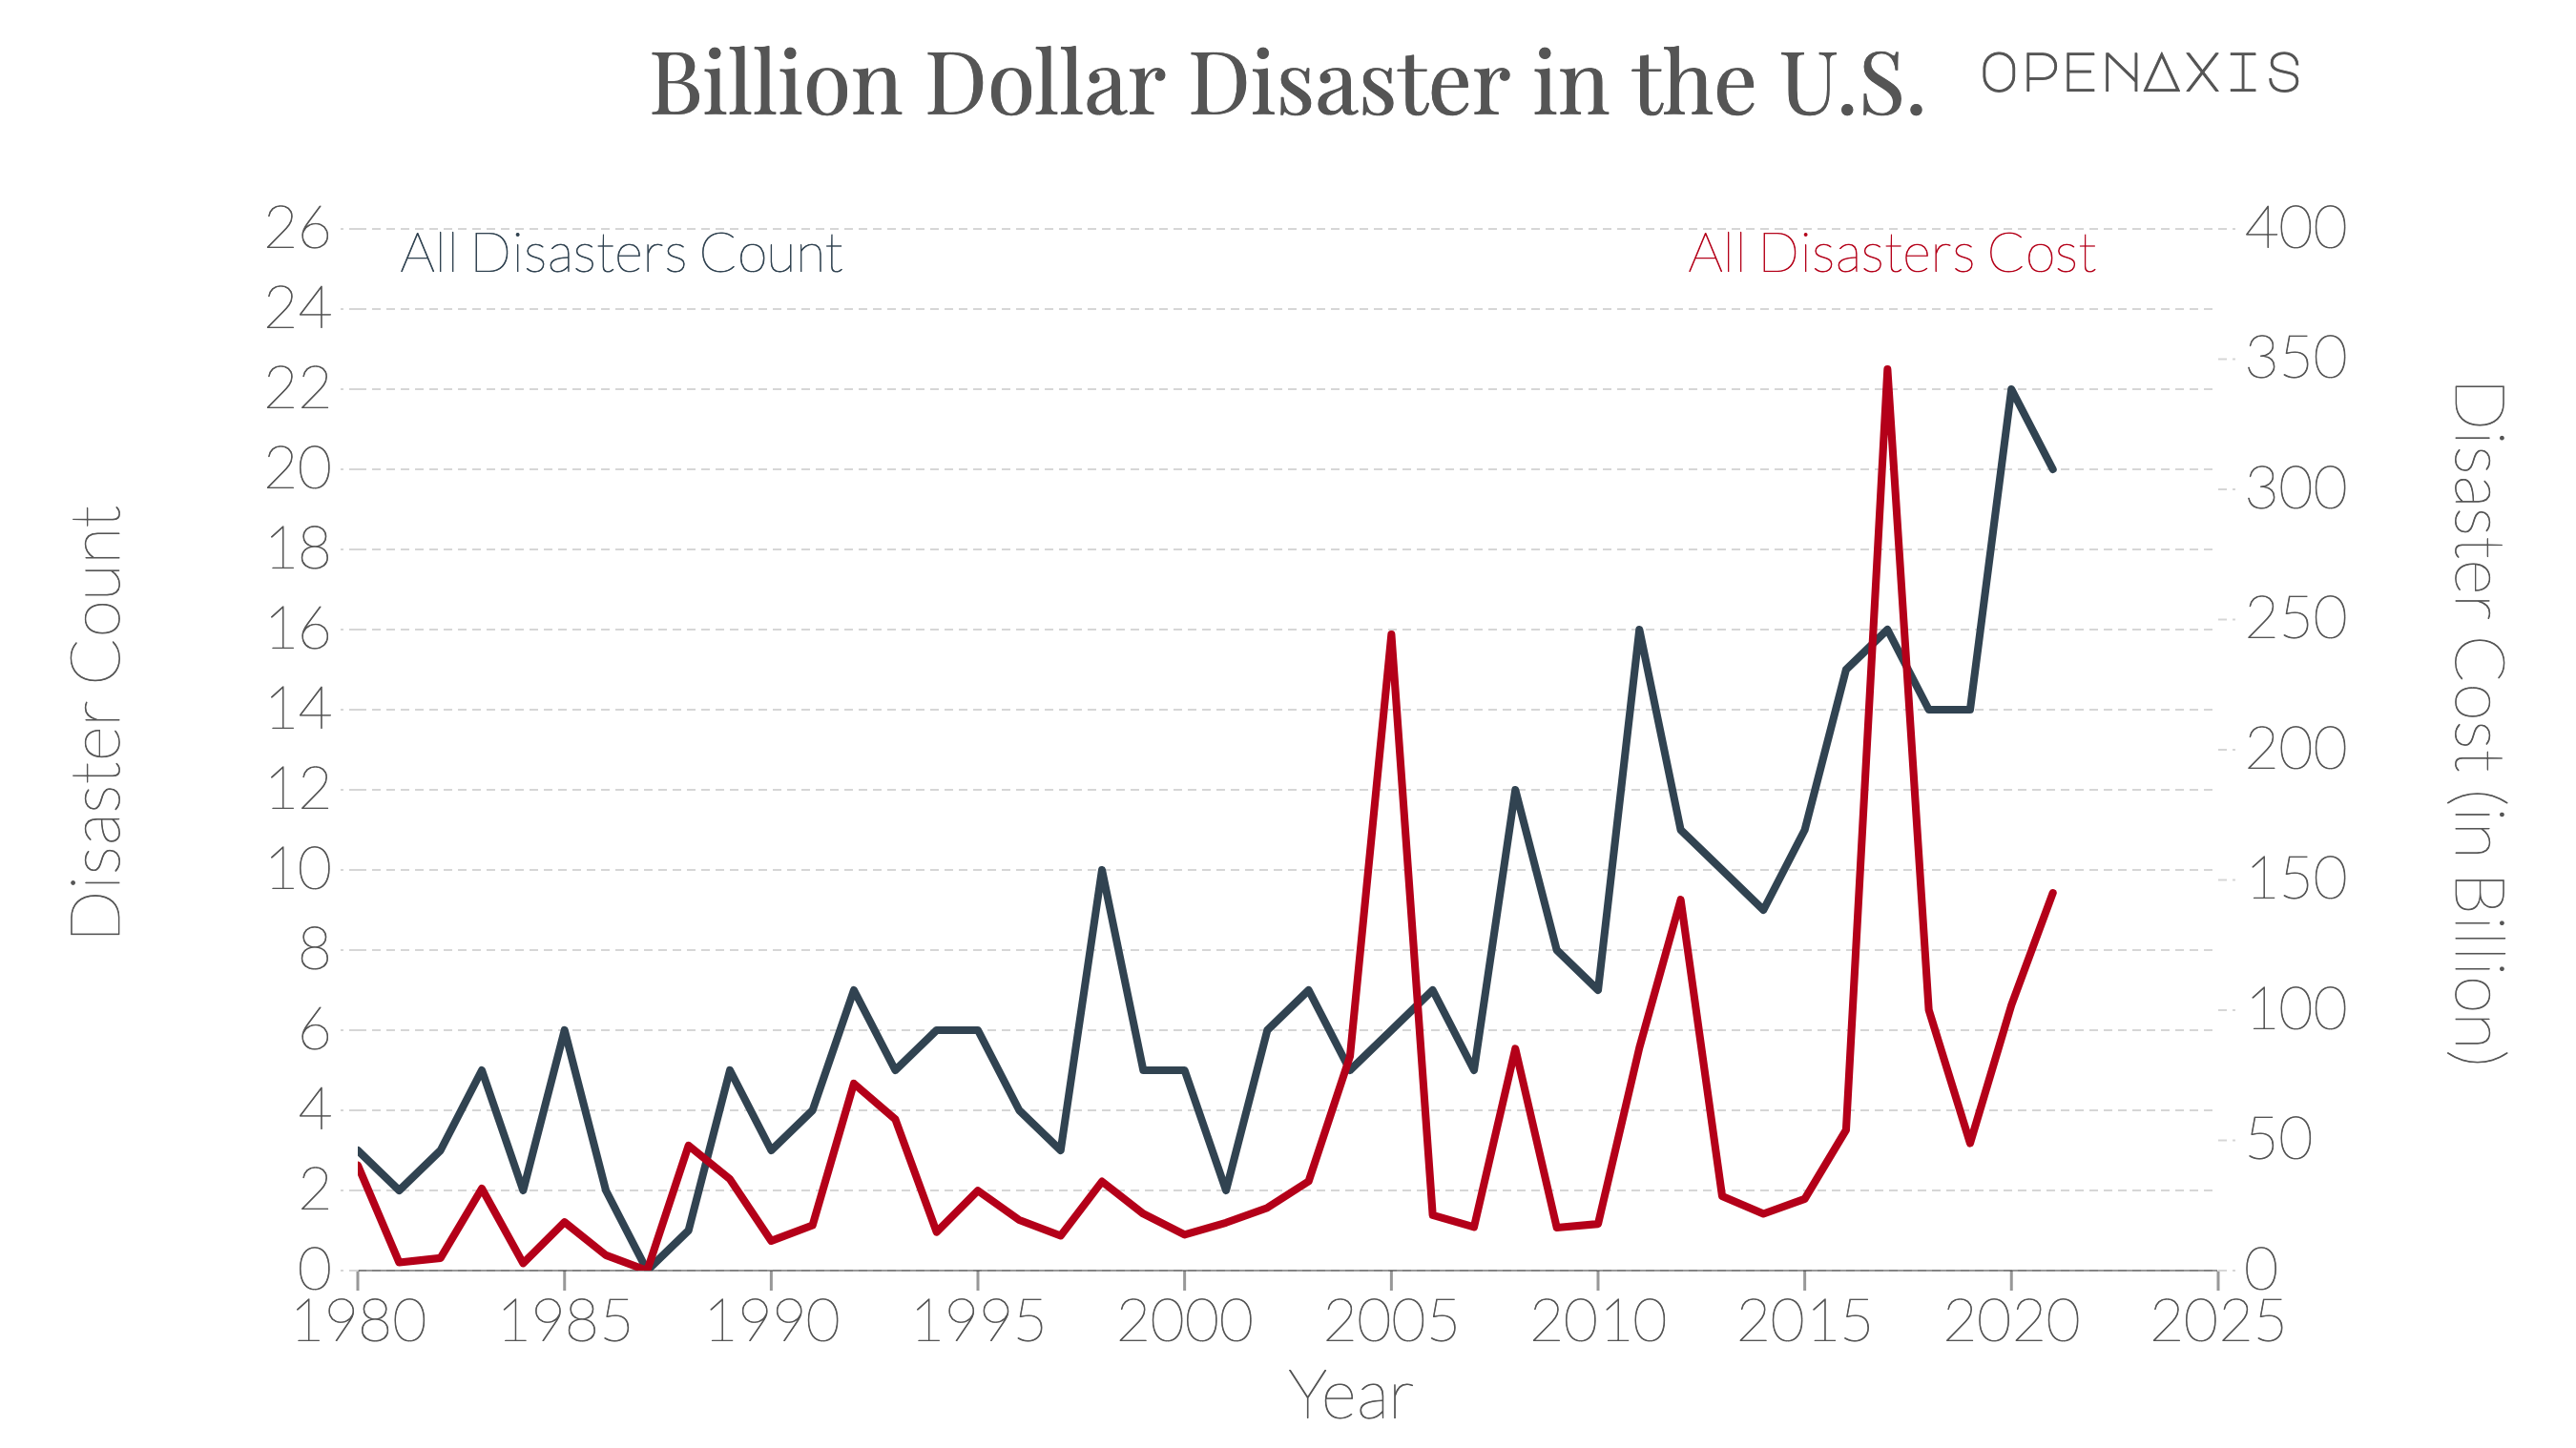 "Billion Dollar Disaster in the U.S."